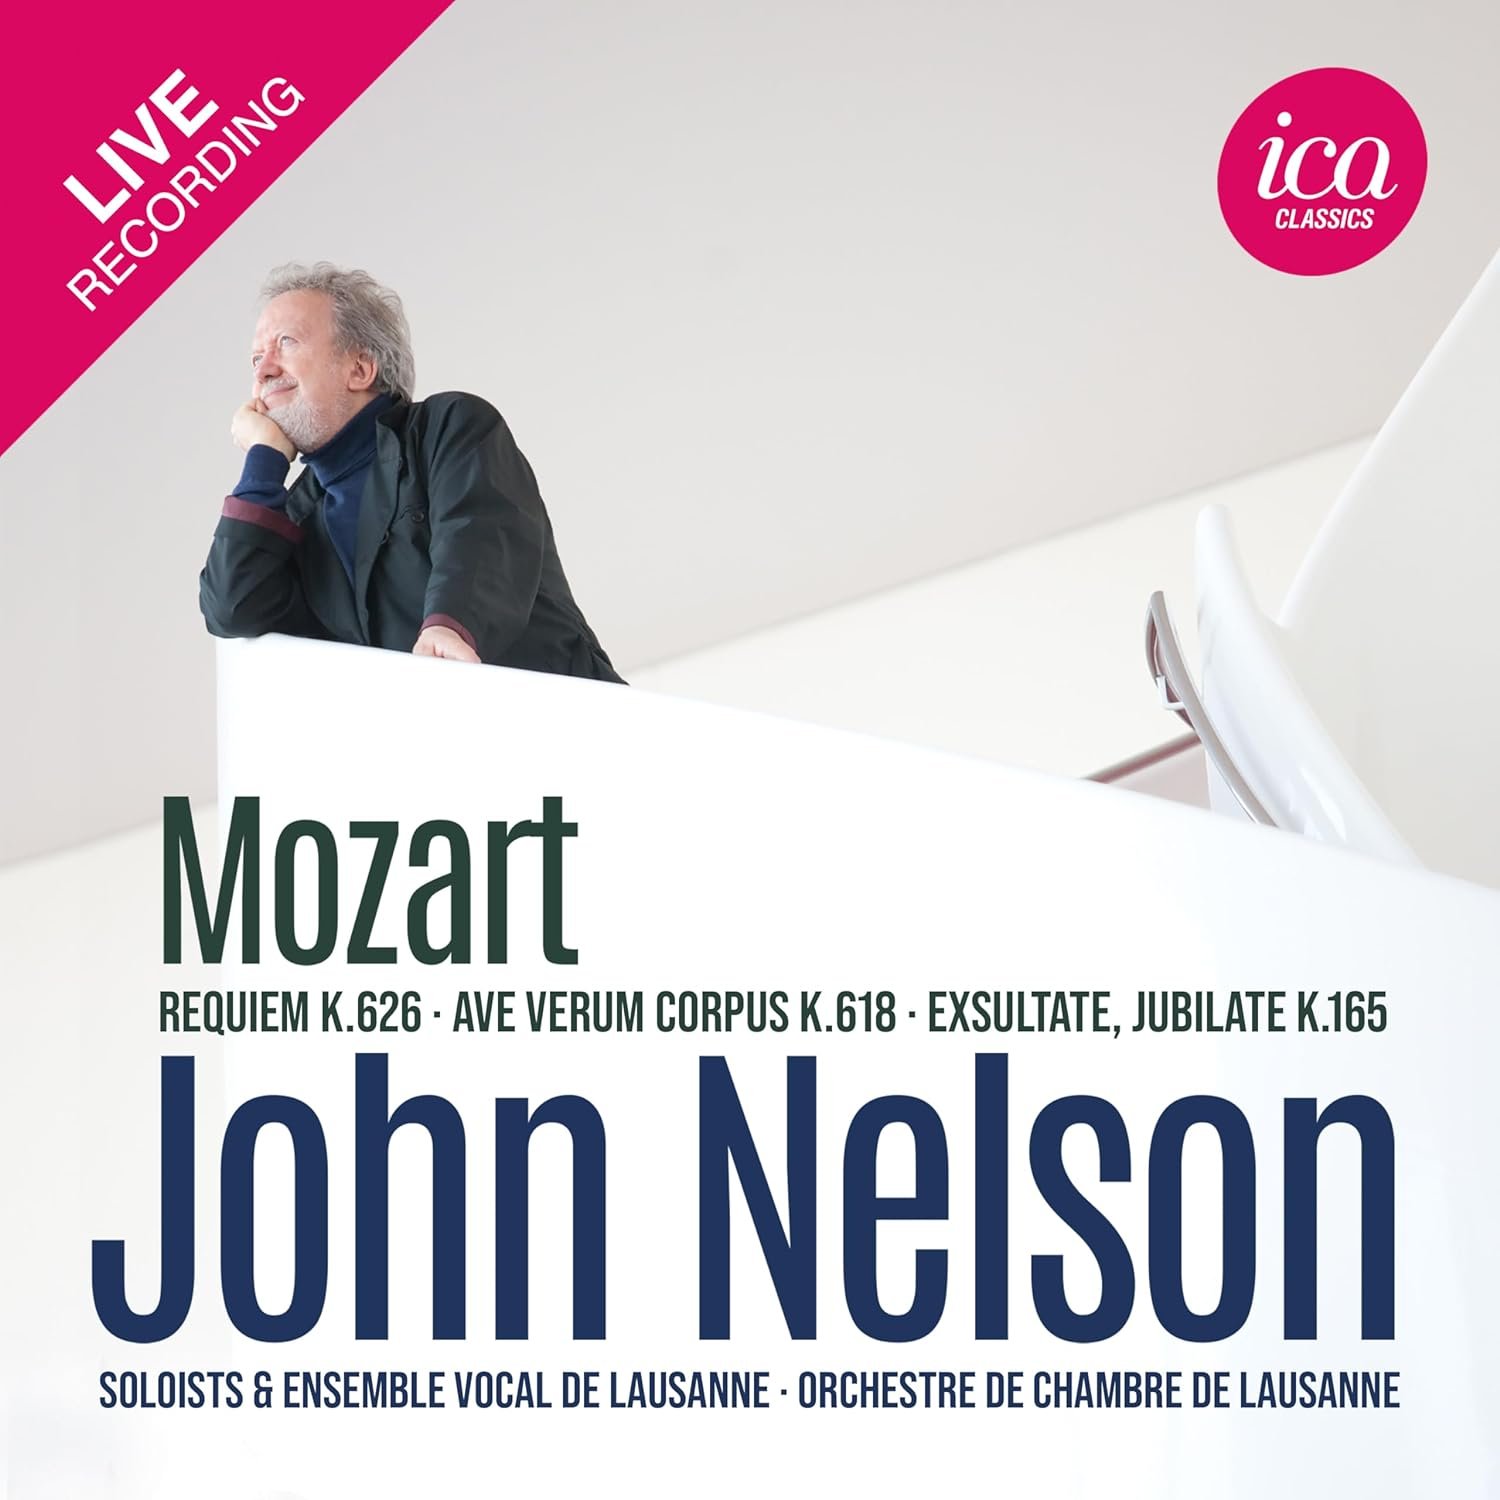 John Nelson: new Mozart recording